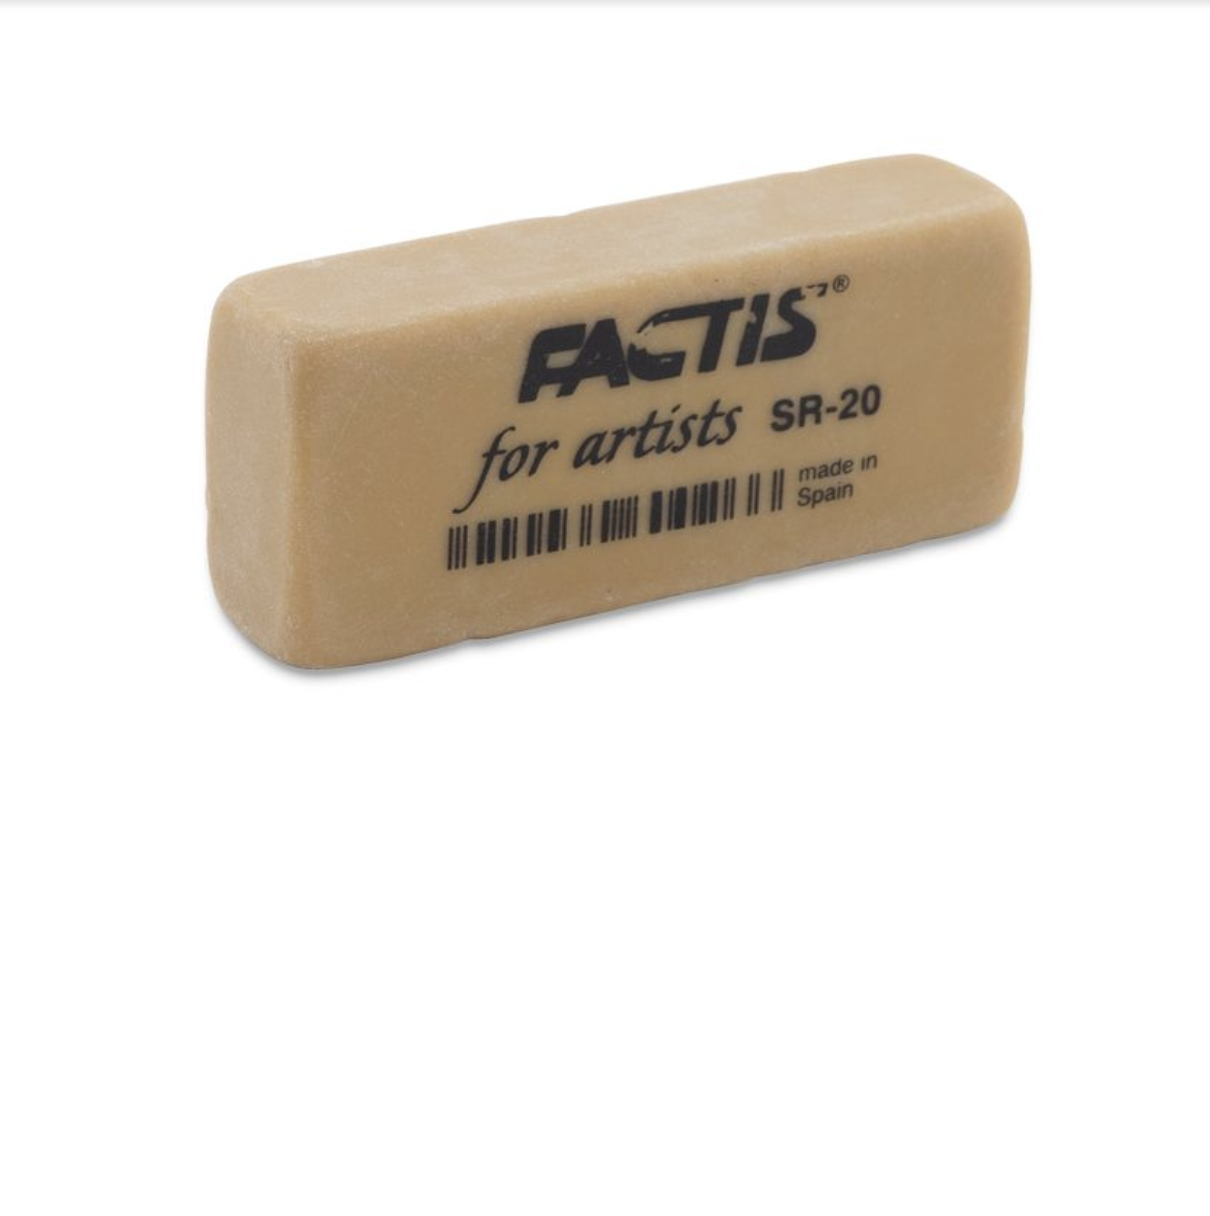 General's® Gum Eraser